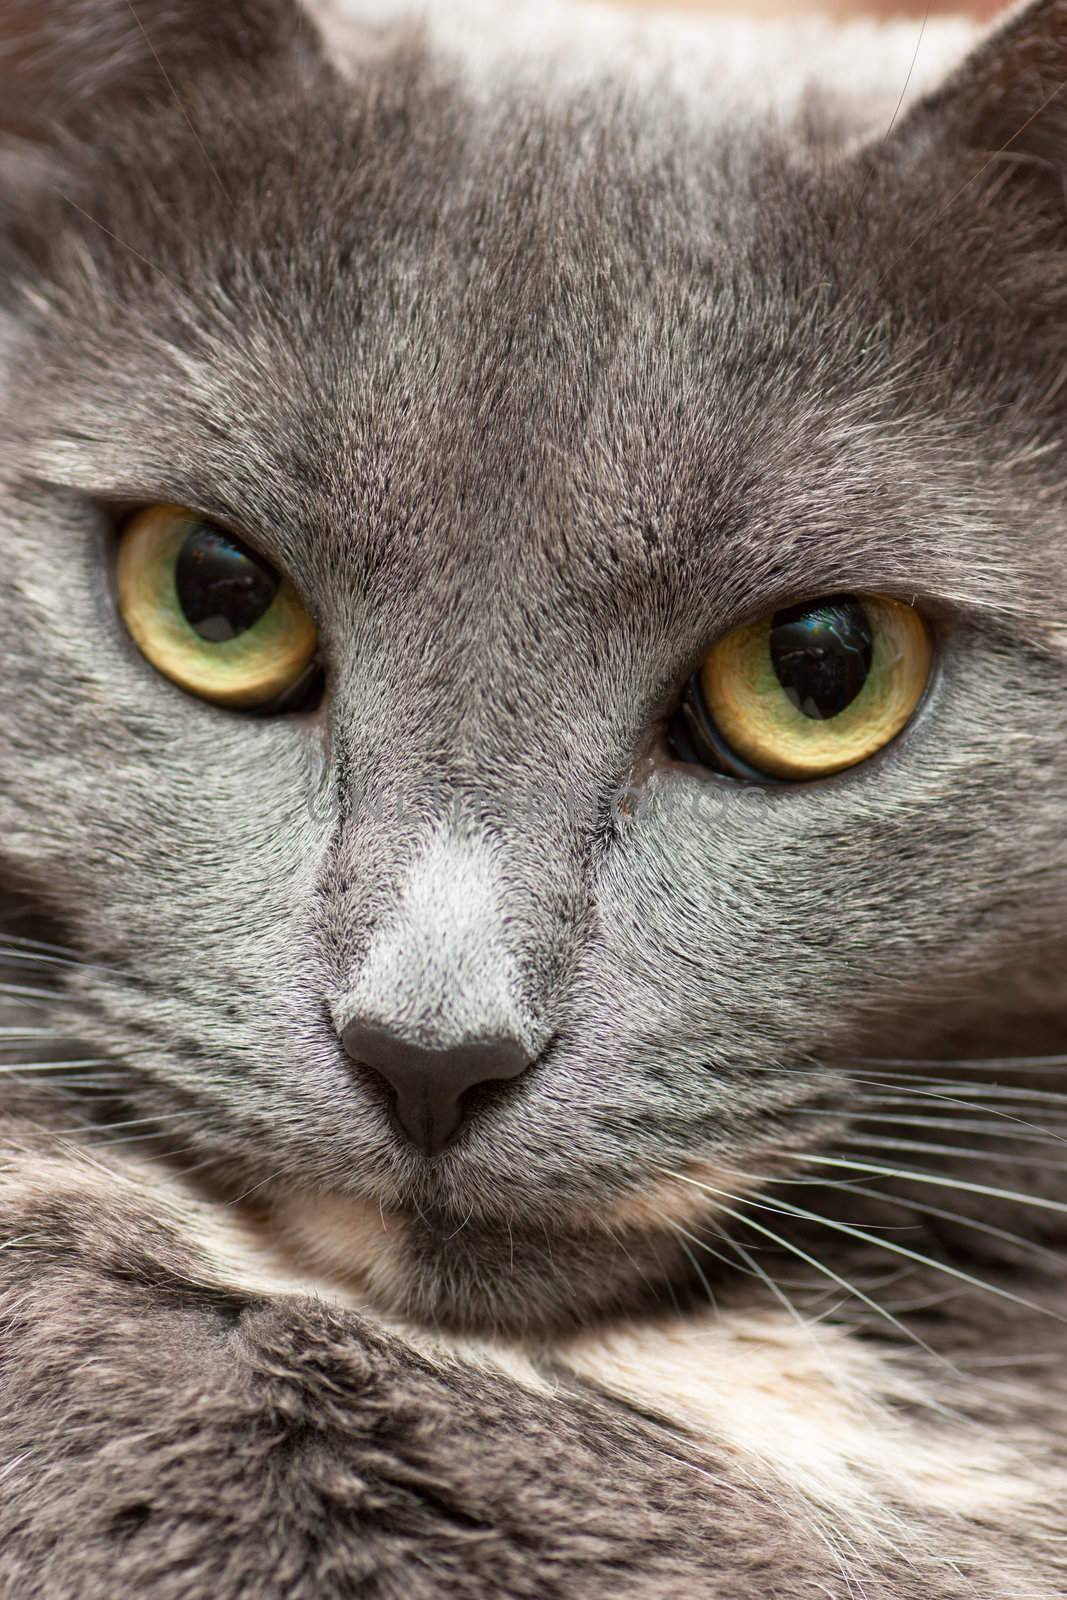 Closeup view of calm cat face